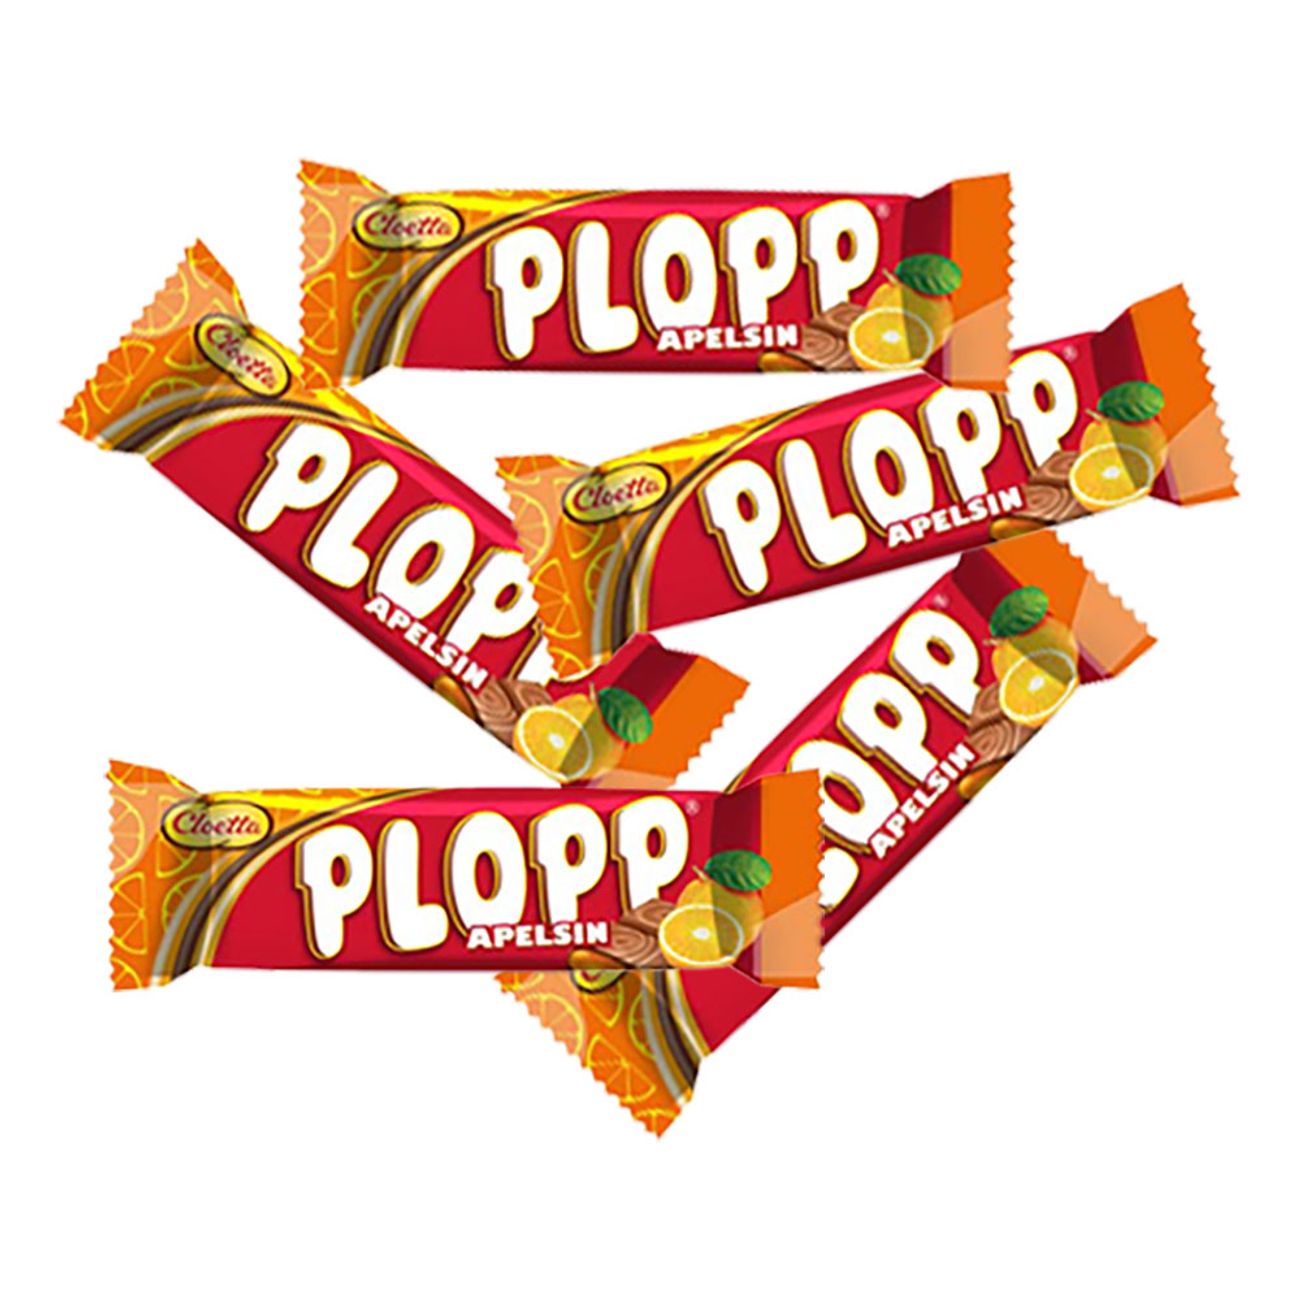 plopp-apelsin-storpack-83252-1